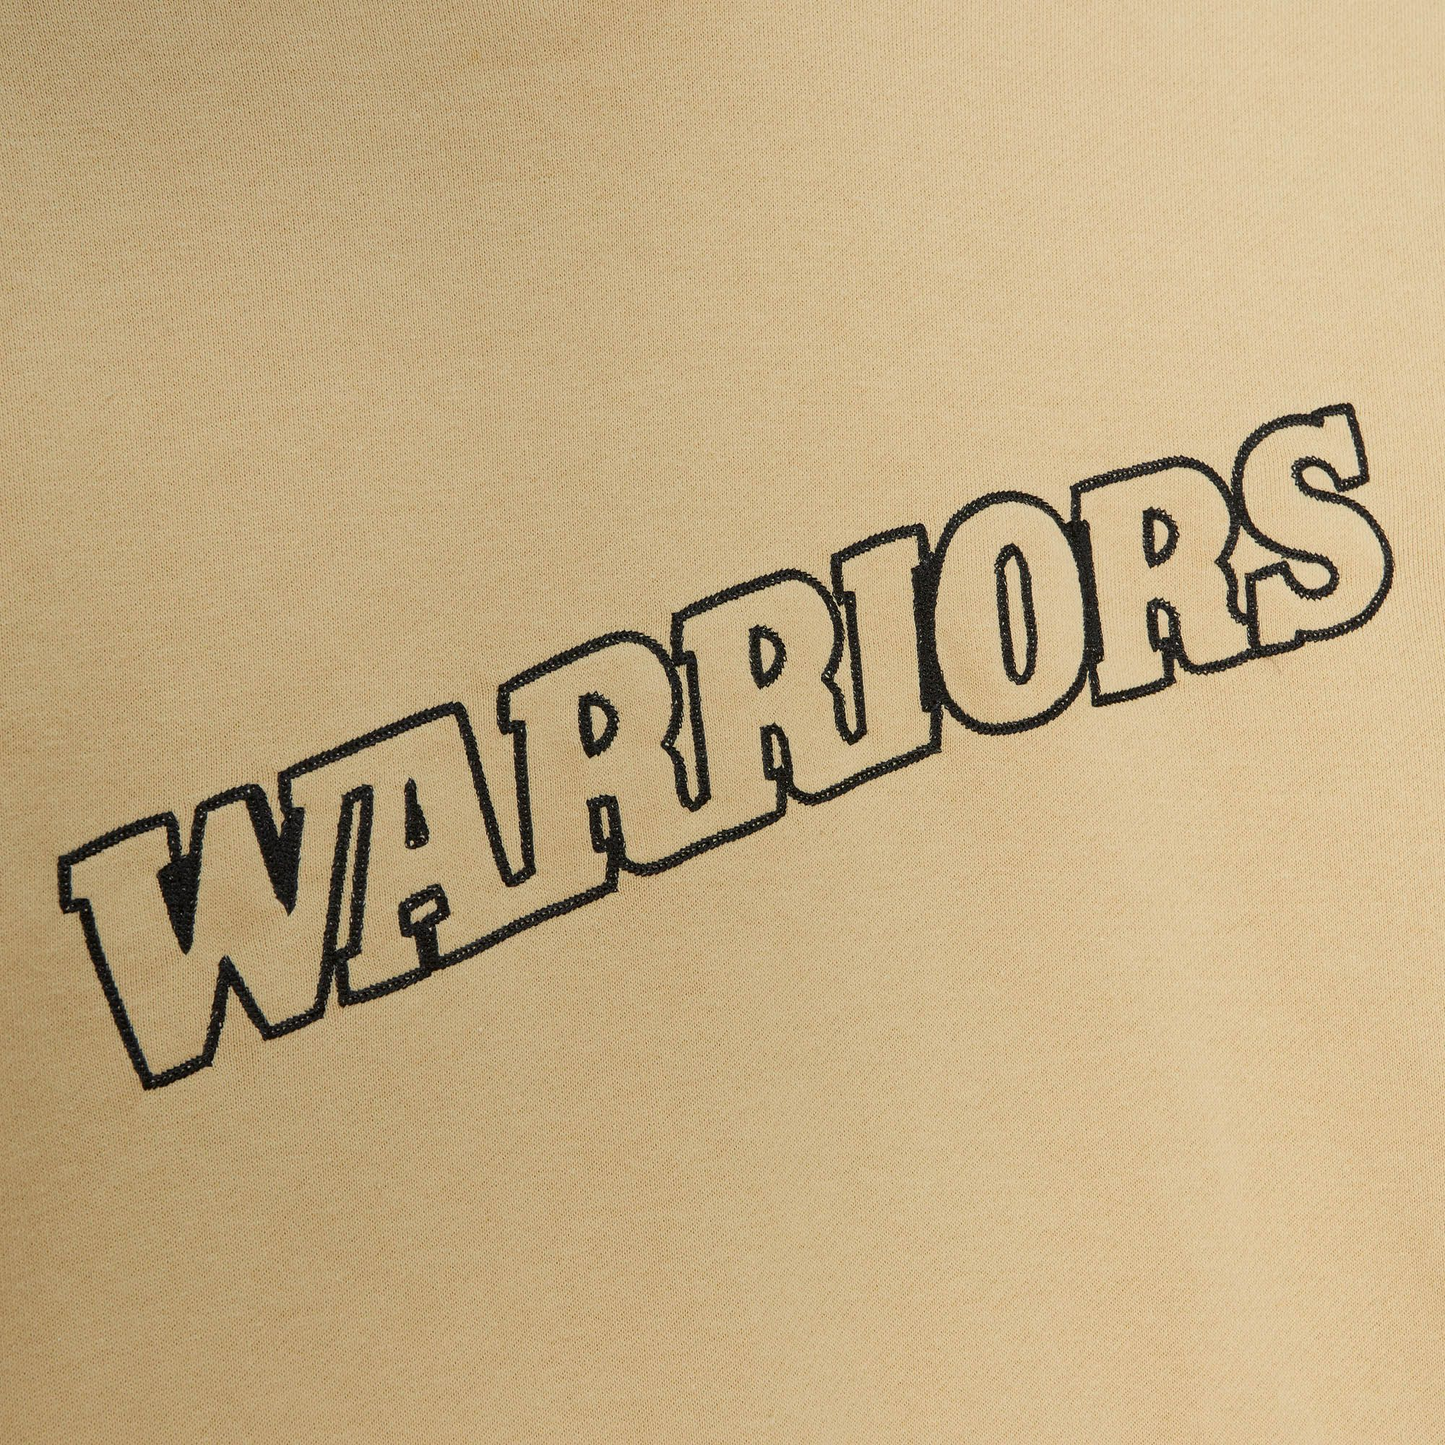 Golden State Warriors Men's Energy Hoodie Sweater - Khaki 23 Khaki / M